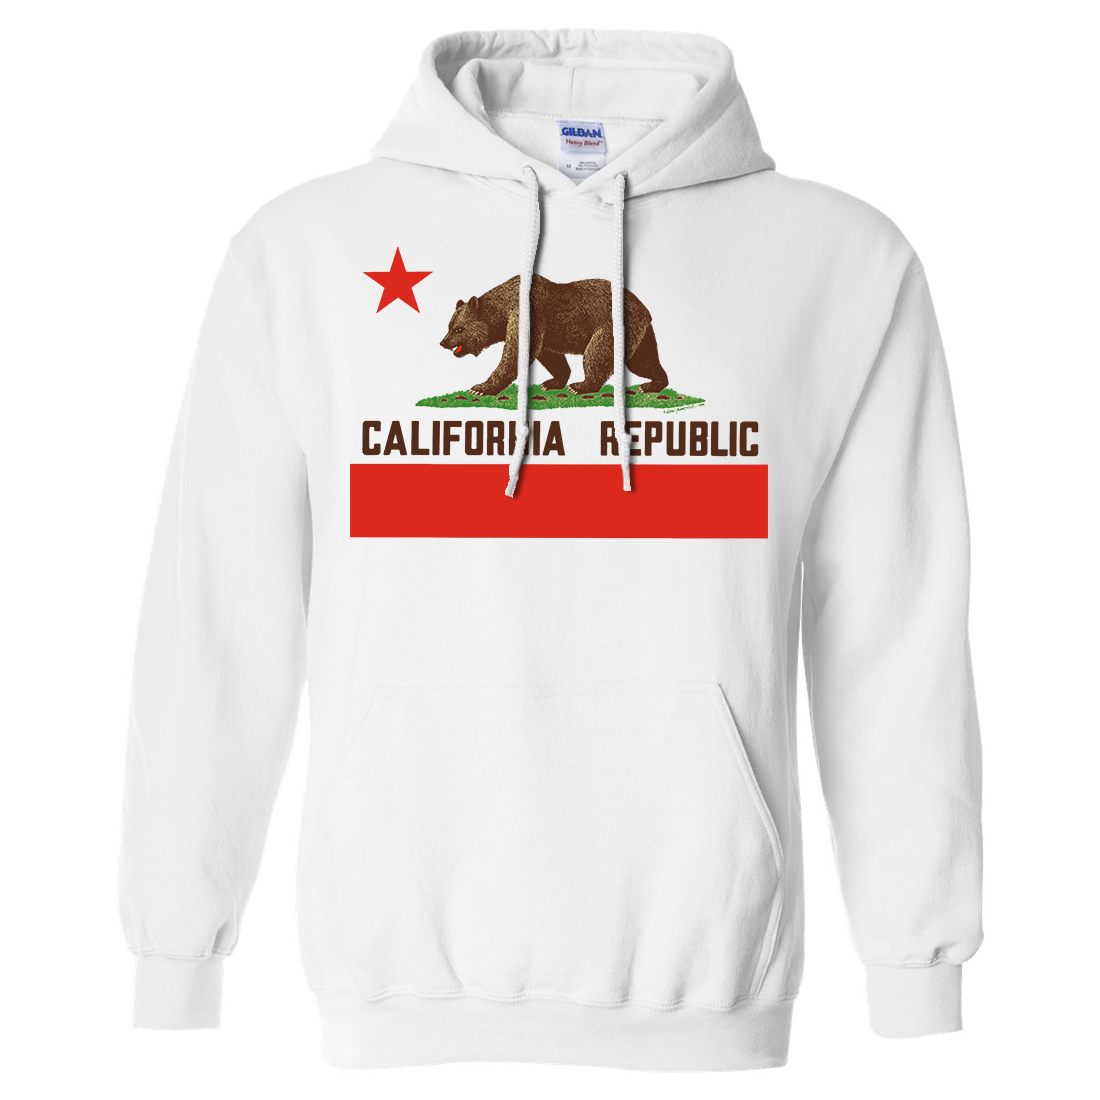 California Republic Clothes - Hoodies, Sweatshirts, Snapbacks and more